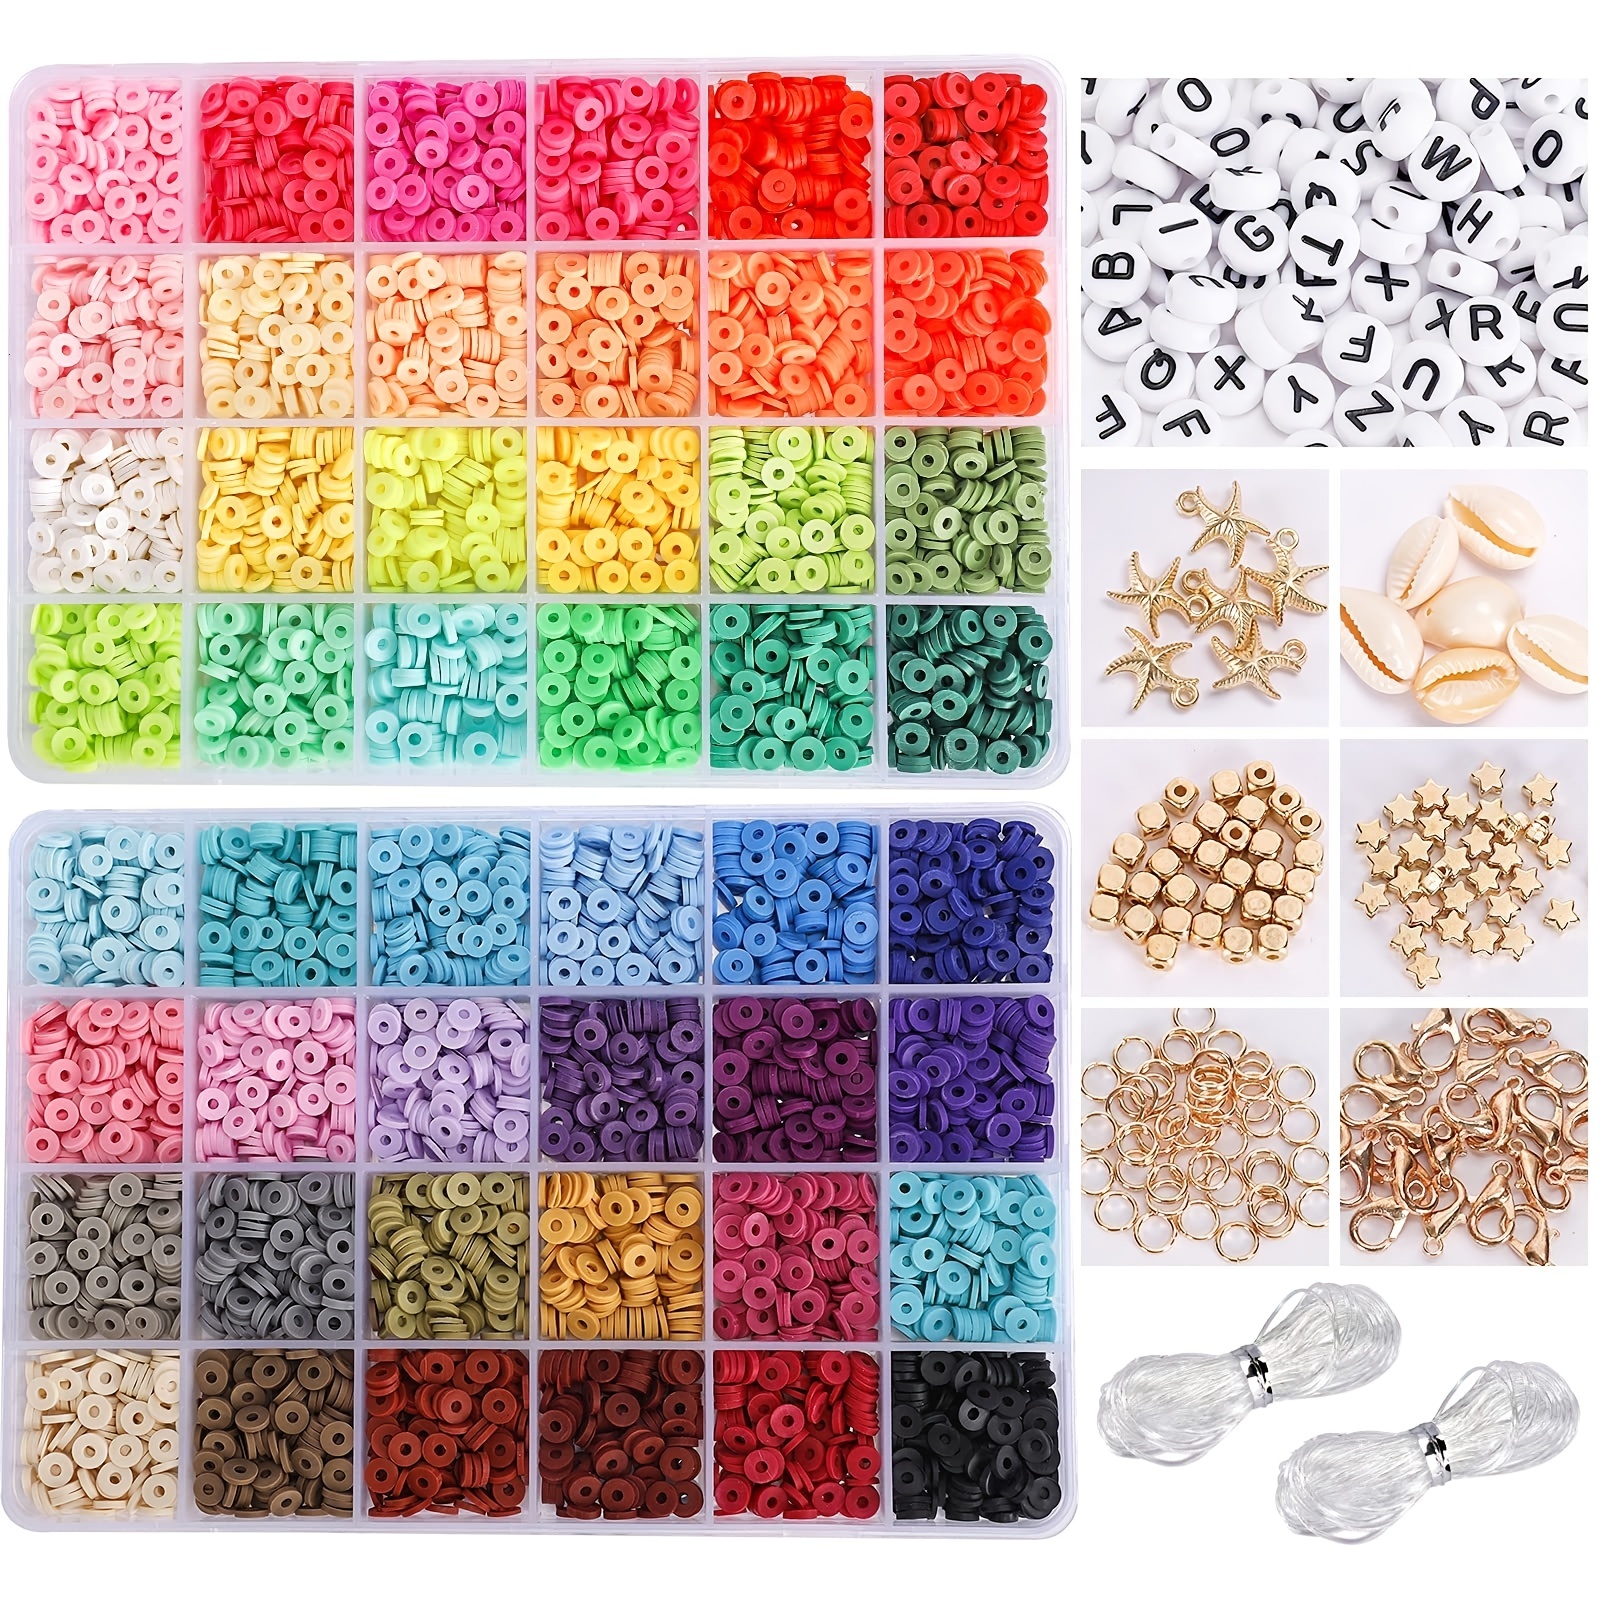 14420pcs Bracelet Beads Kit, 56 Colors, Charms, Strings